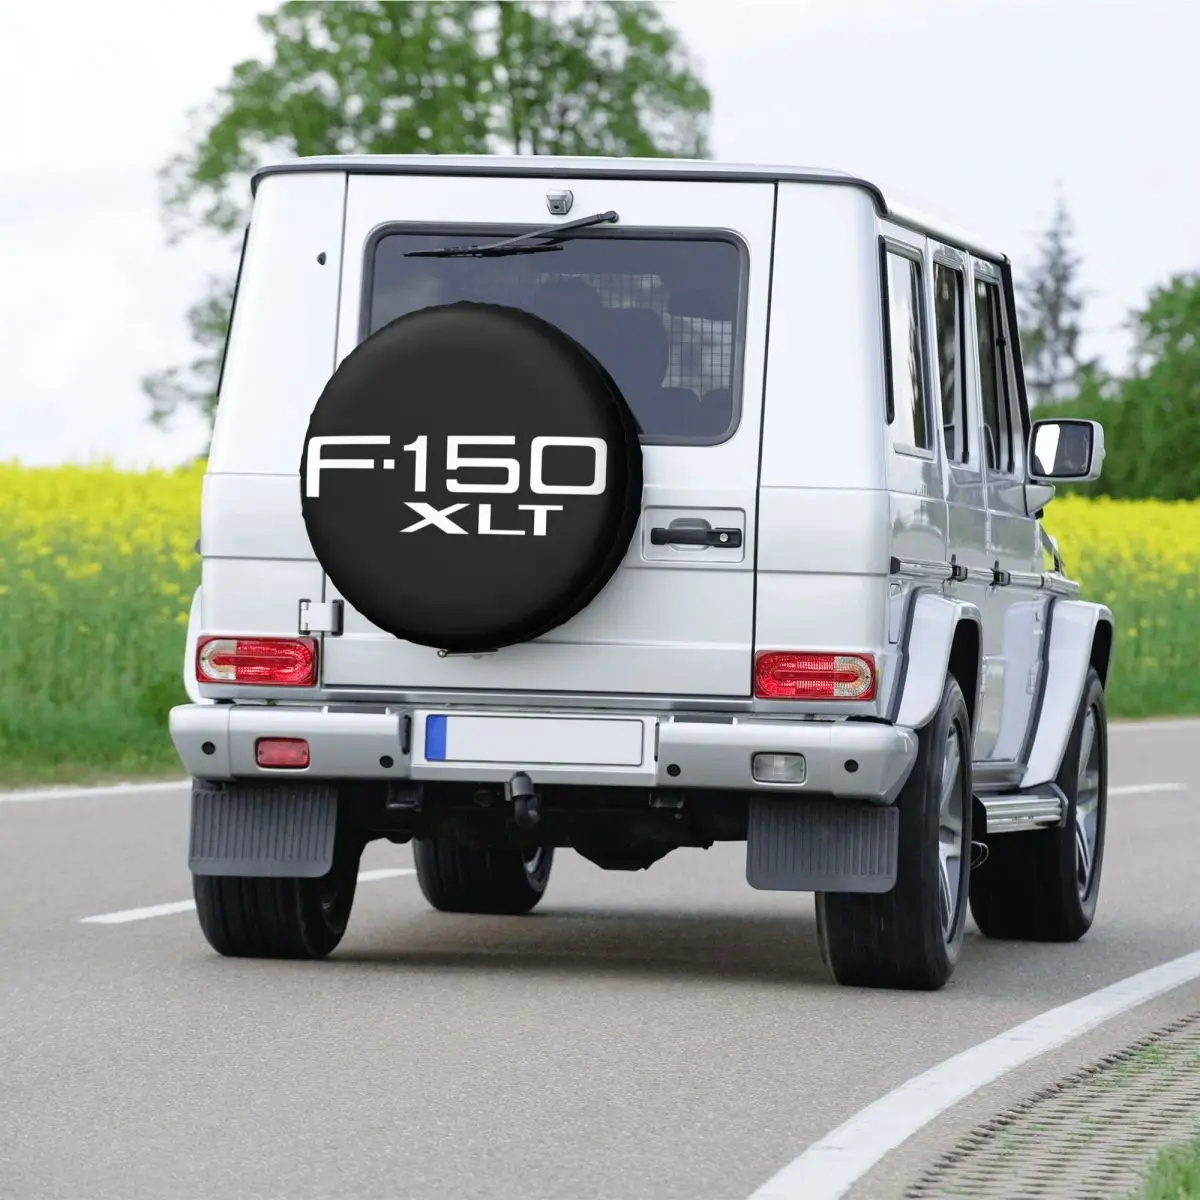 F 150 XLT המכונית גלגל החילוף בגלגל כיסוי עבור פורד פרדו Pajero רנגלר ג 'יפ RV שטח נופש רכב אביזרים 14